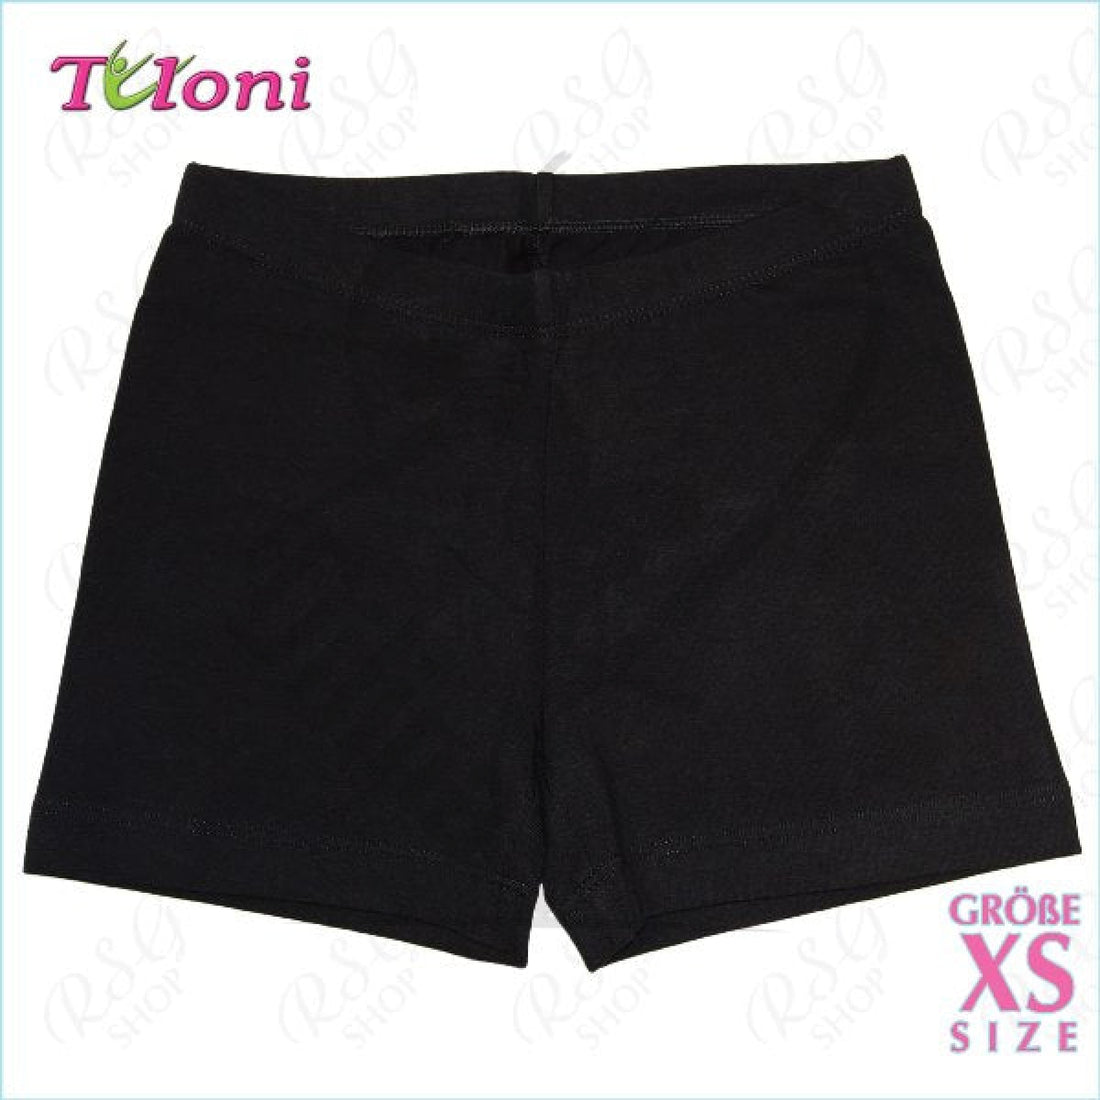 Tuloni Shorts Black Xs (140-146)